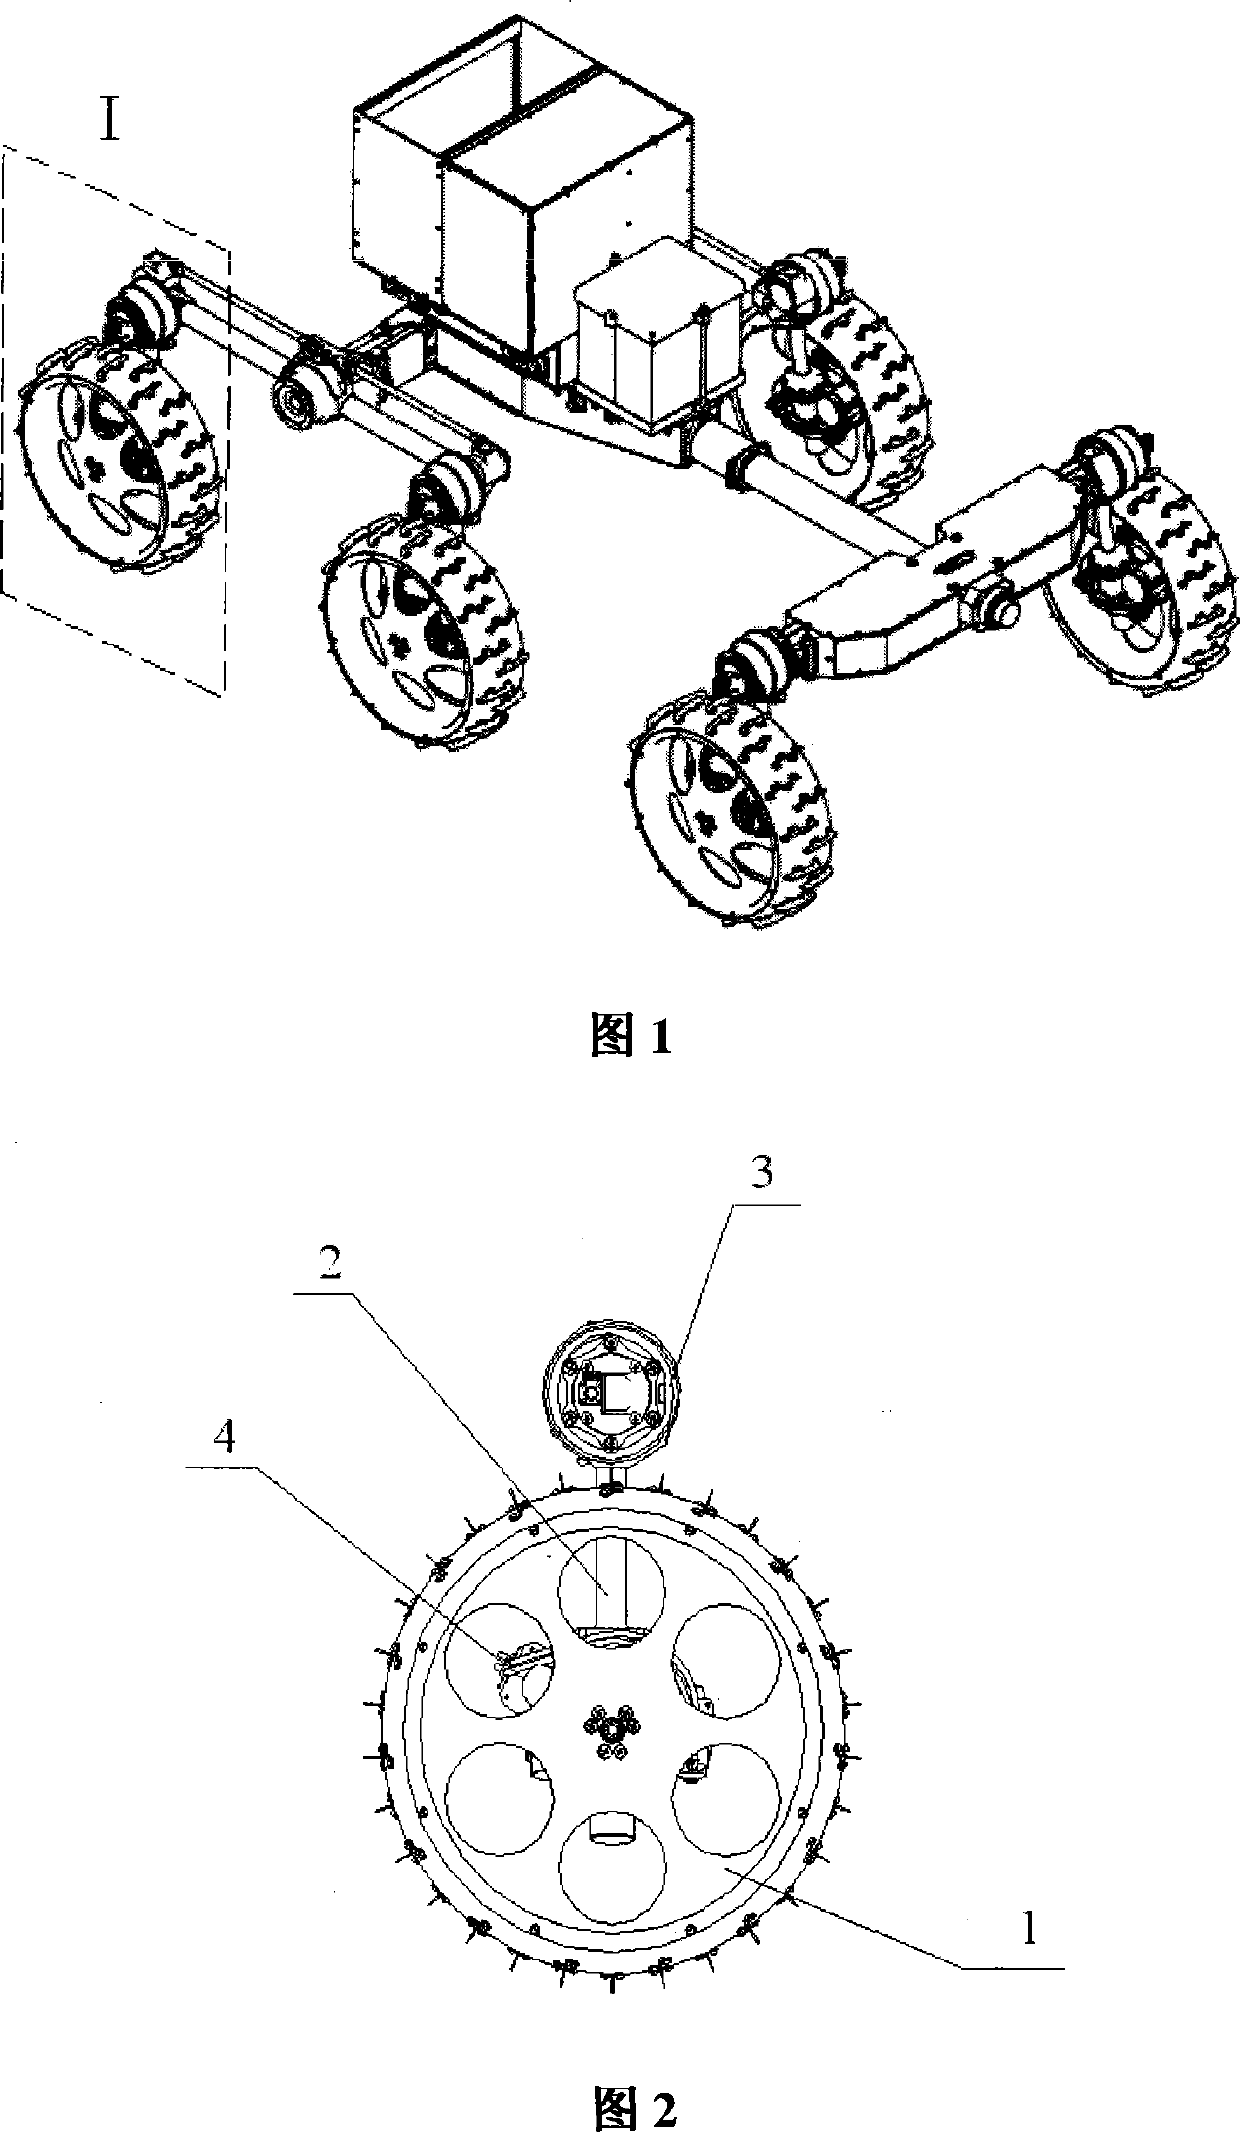 Method for controlling running of wheeled interplanetary exploration patrol vehicle